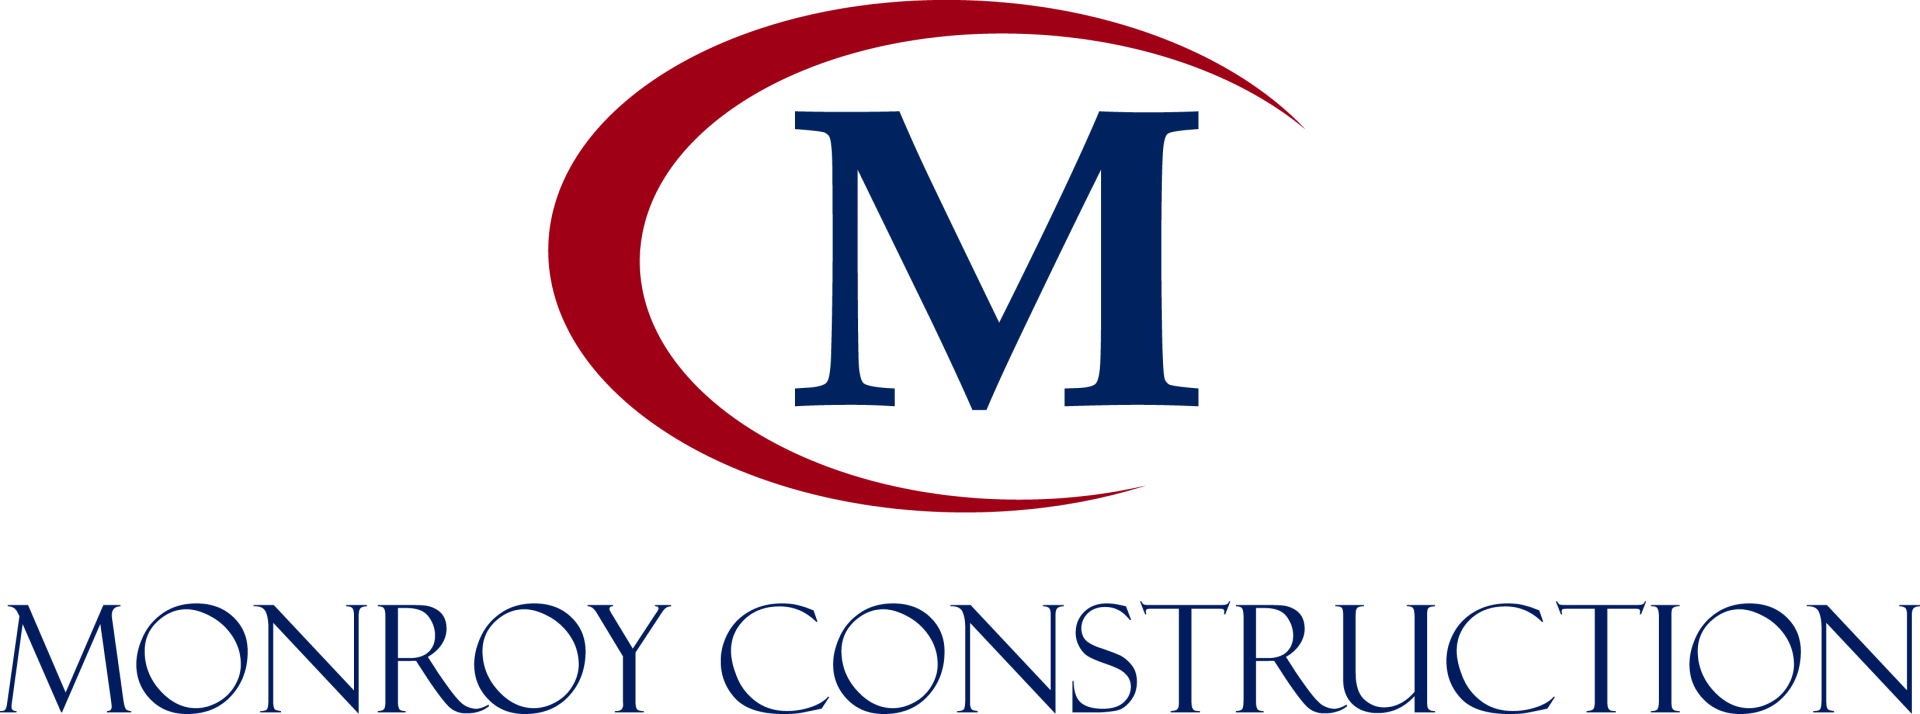 Monroy Construction Inc.